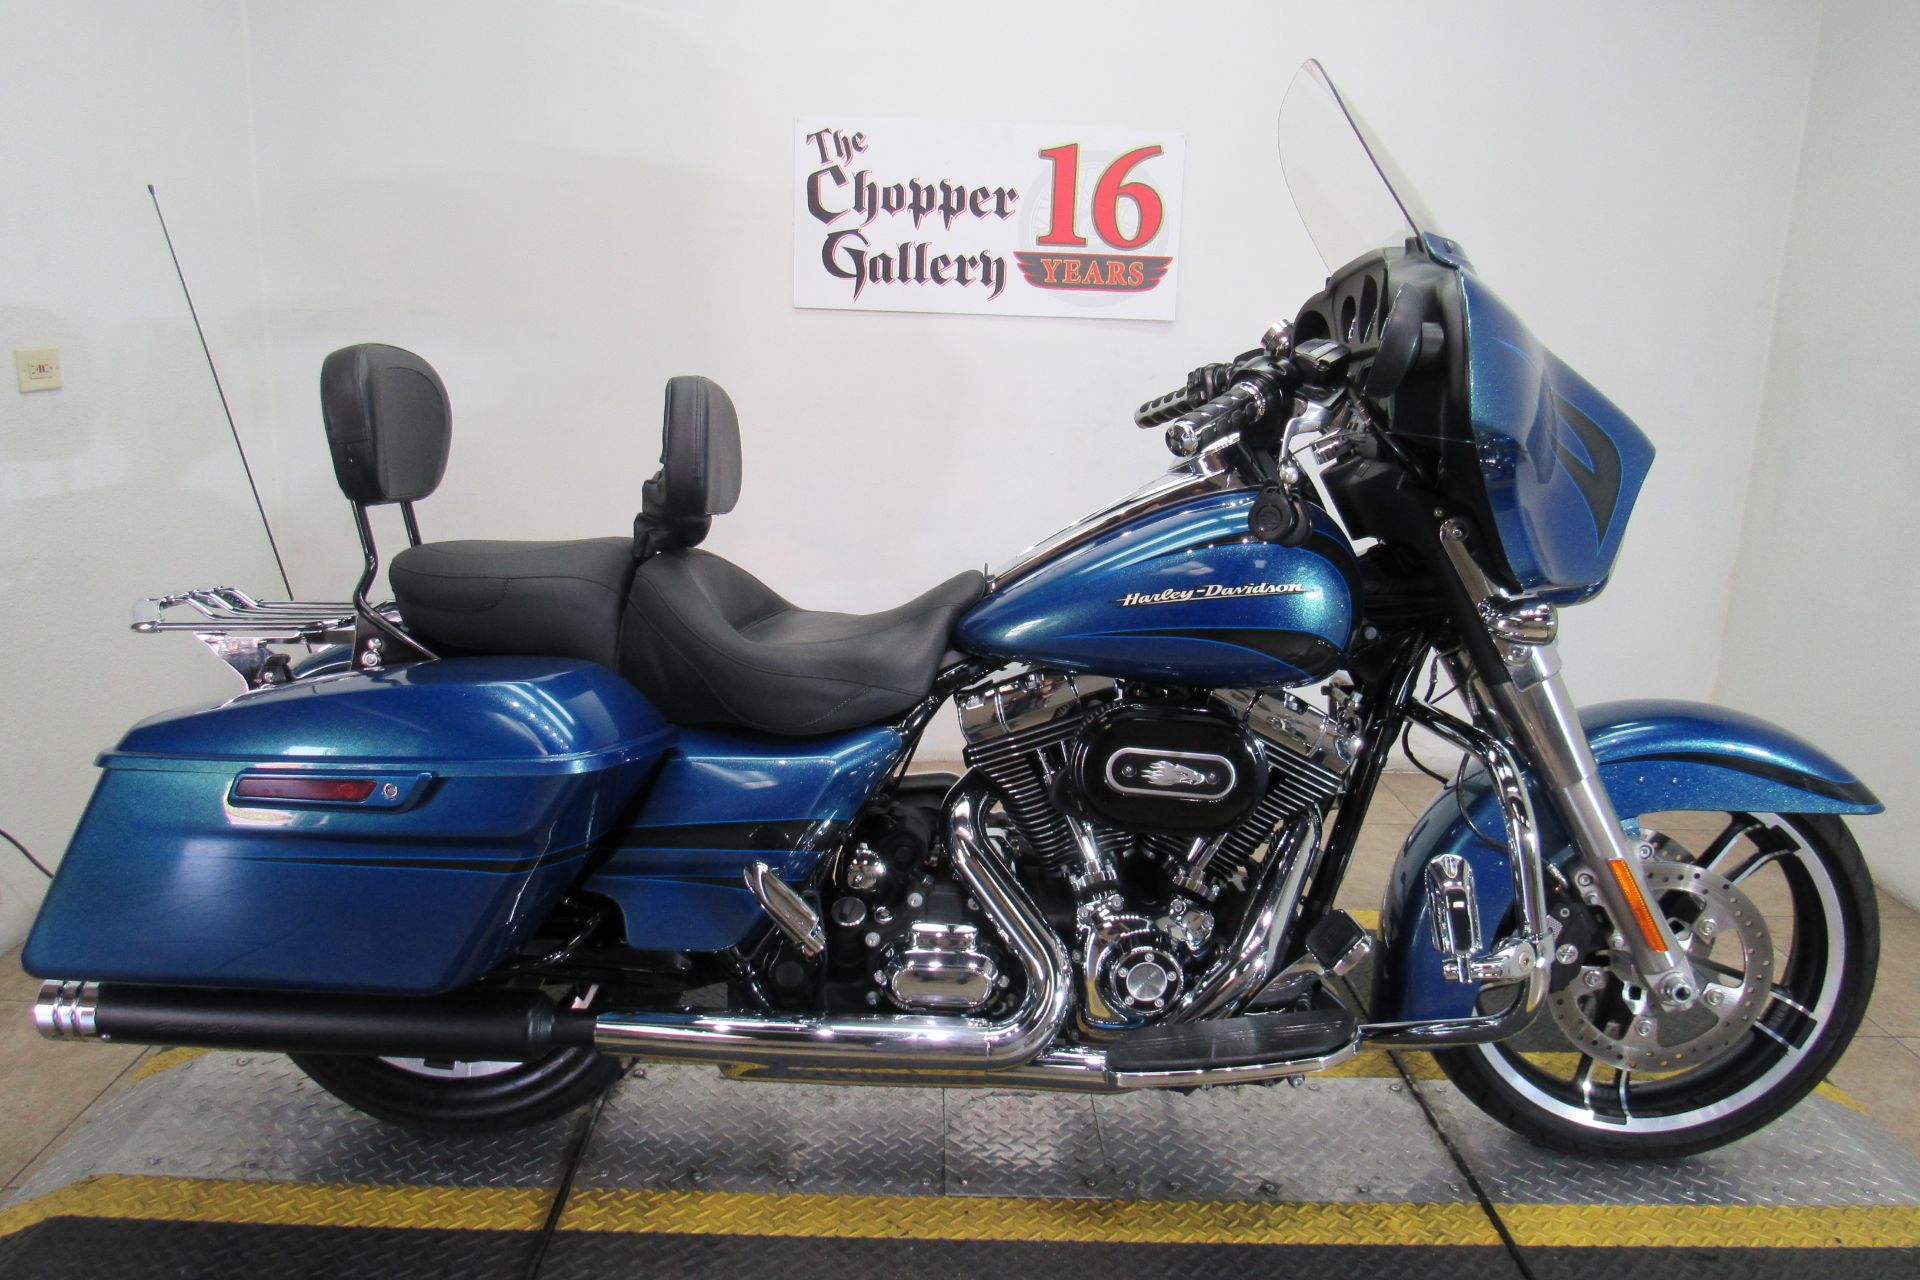 2014 Harley-Davidson Street Glide® in Temecula, California - Photo 1